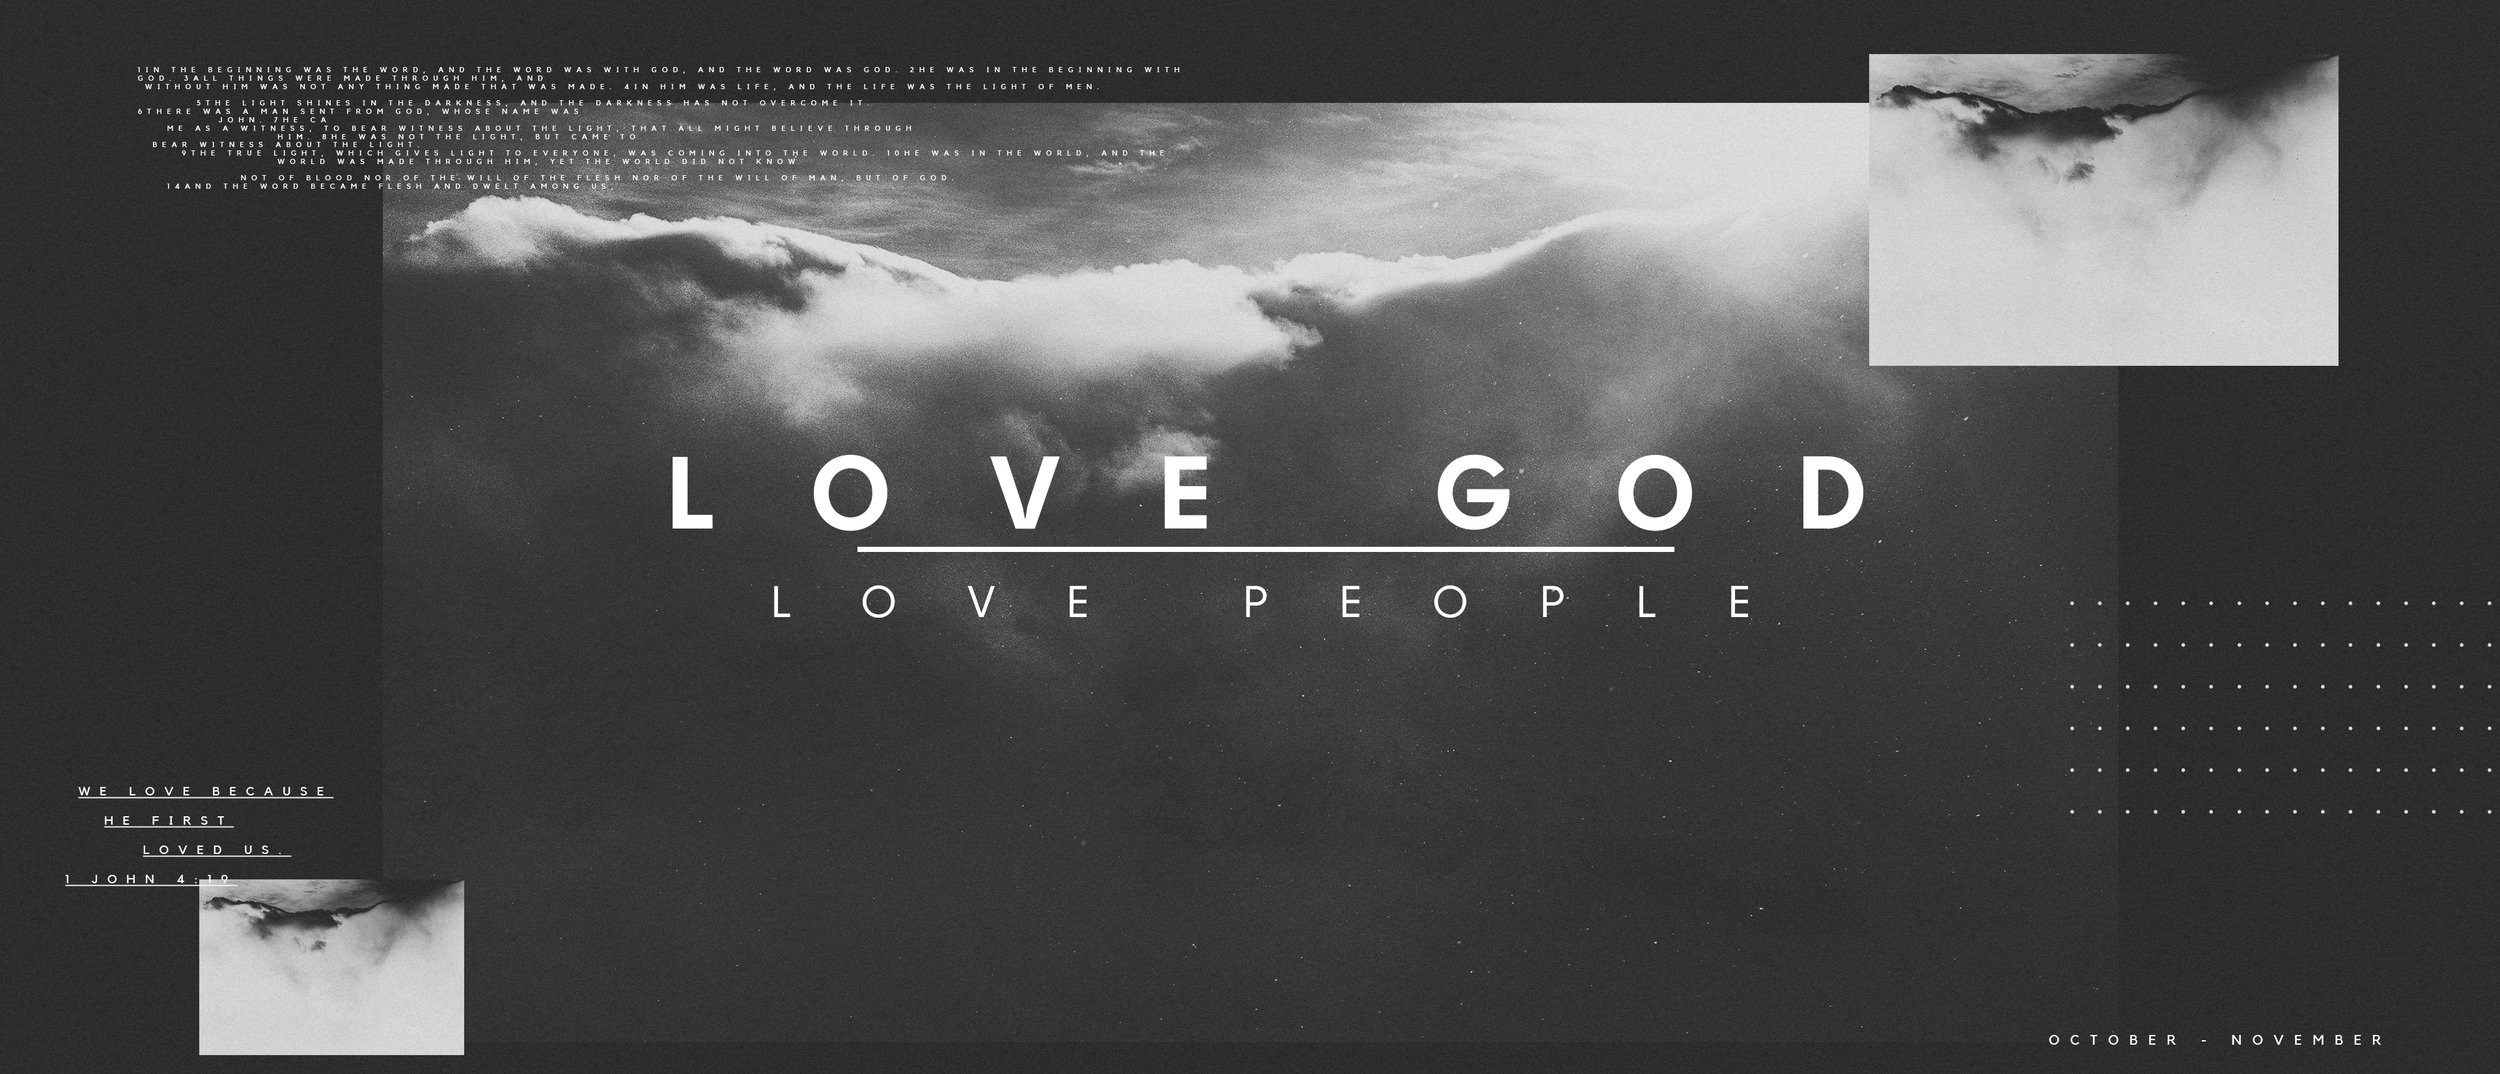 Love God Love People-Recovered.jpg